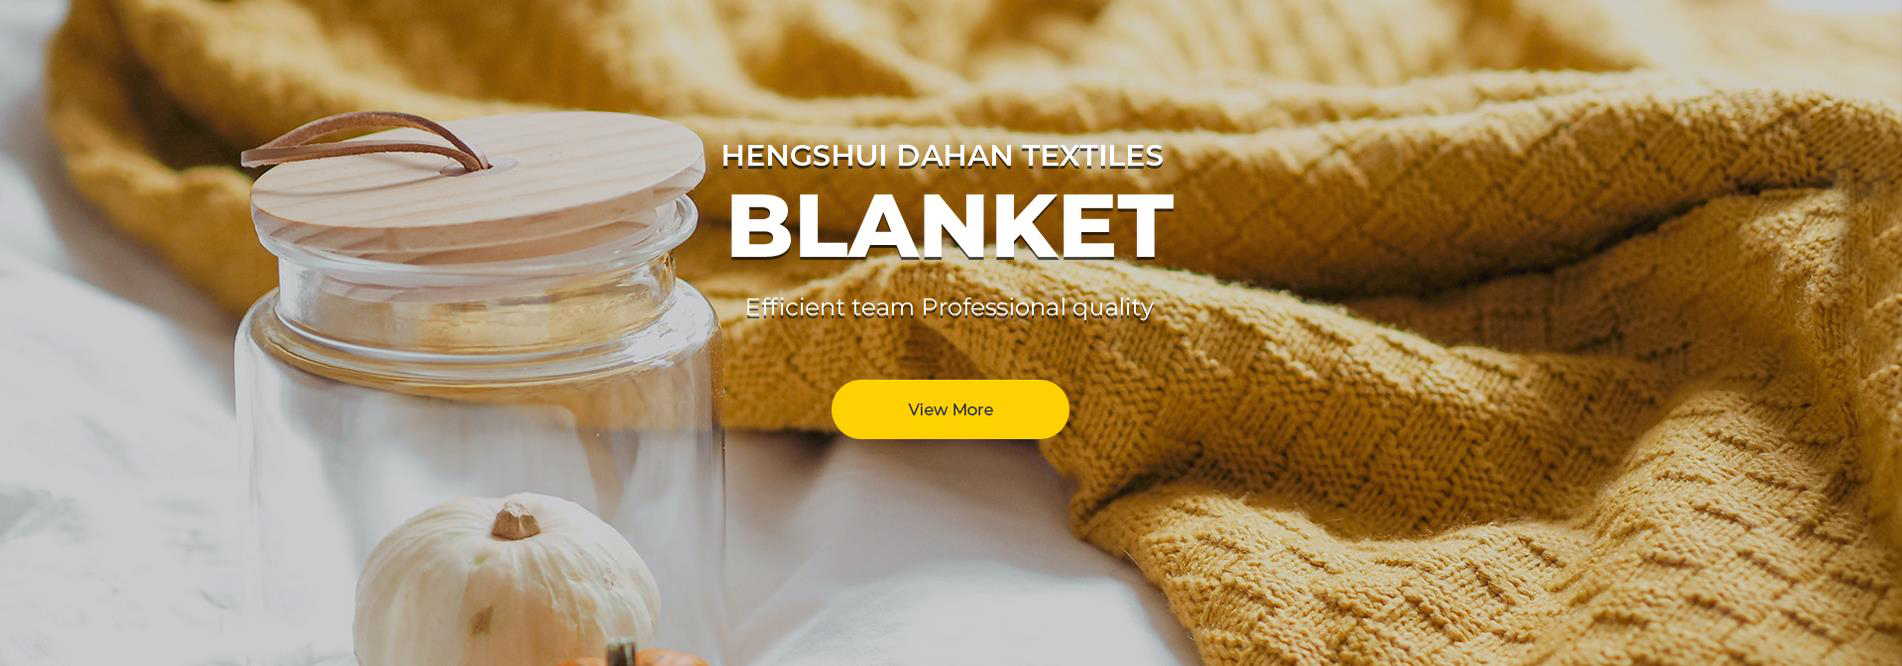 Hengshui Dahan Textiles Co.,Ltd.